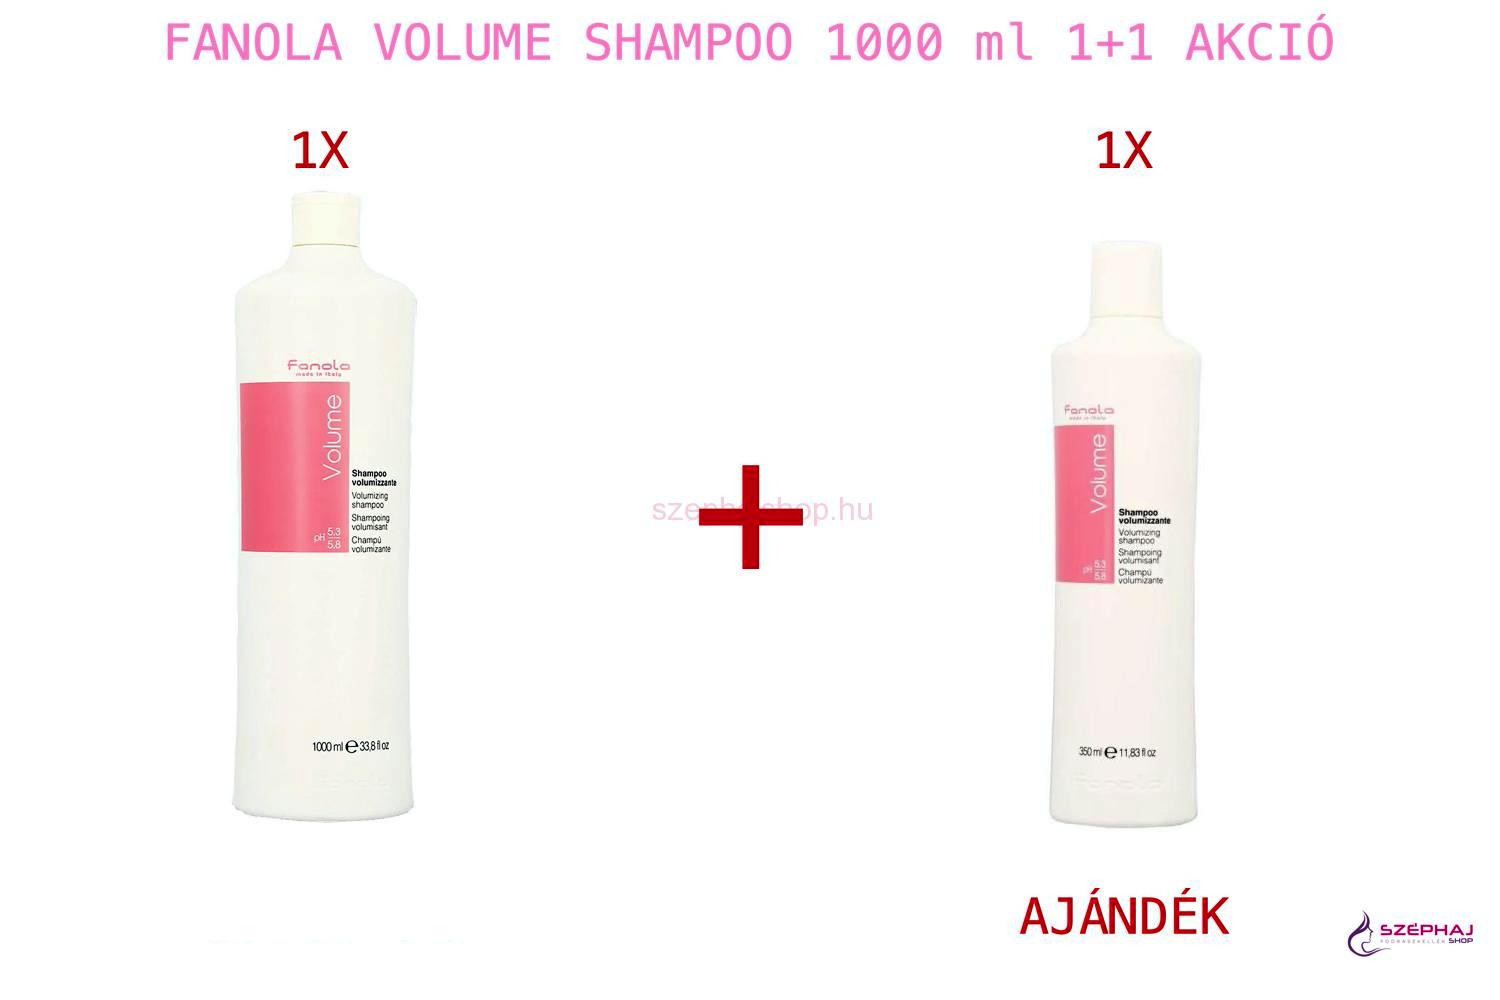 FANOLA Volume Shampoo 1000 ml 1+1 AKCIÓ